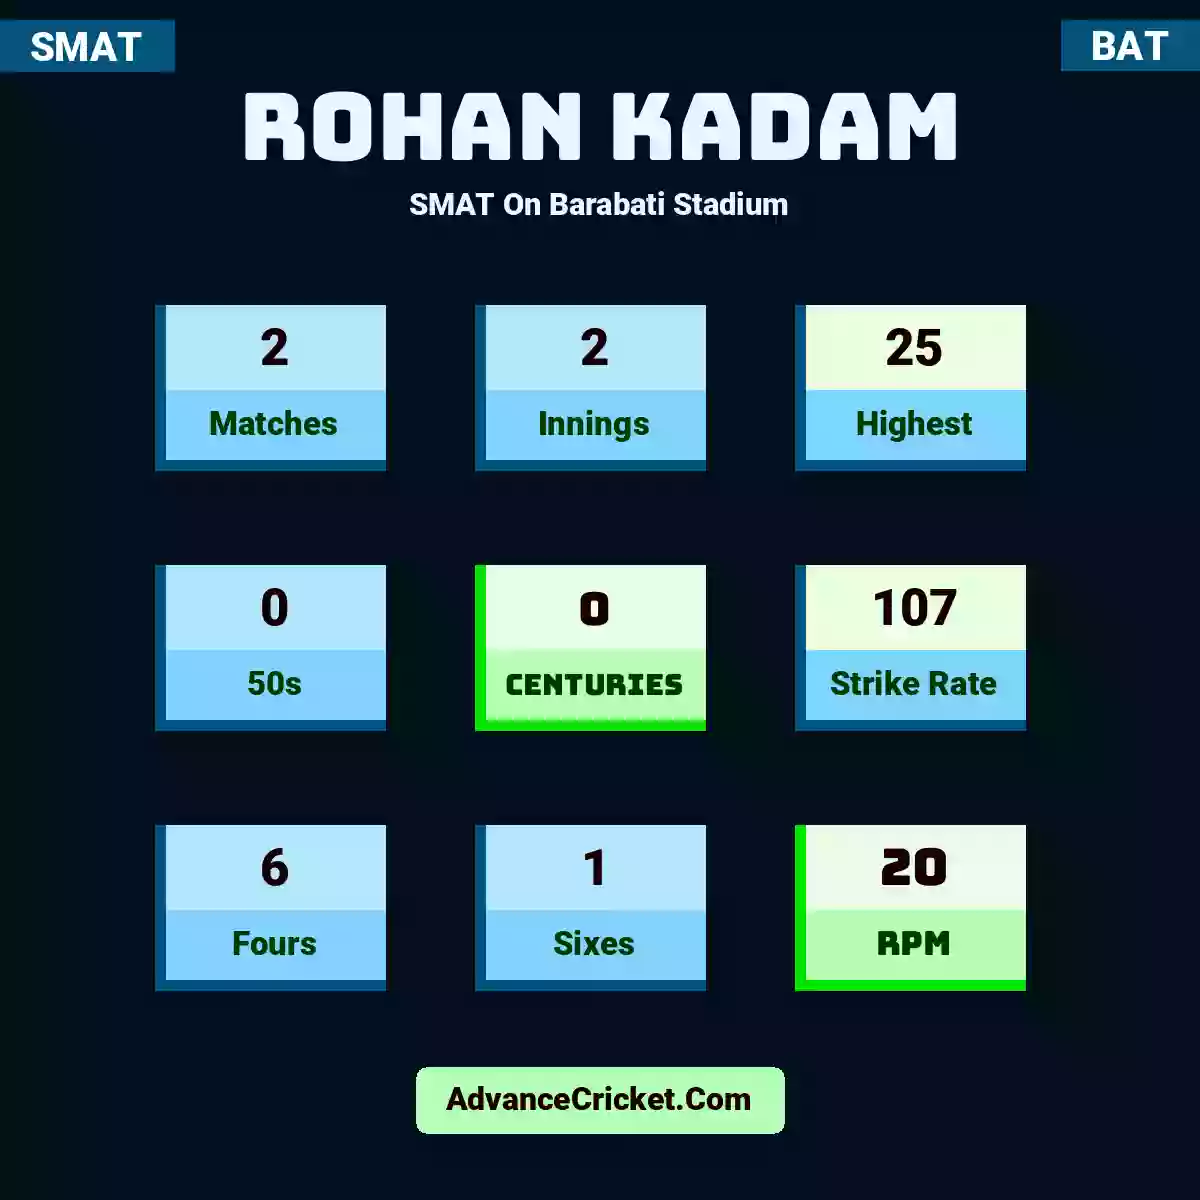 Rohan Kadam SMAT  On Barabati Stadium, Rohan Kadam played 2 matches, scored 25 runs as highest, 0 half-centuries, and 0 centuries, with a strike rate of 107. R.Kadam hit 6 fours and 1 sixes, with an RPM of 20.